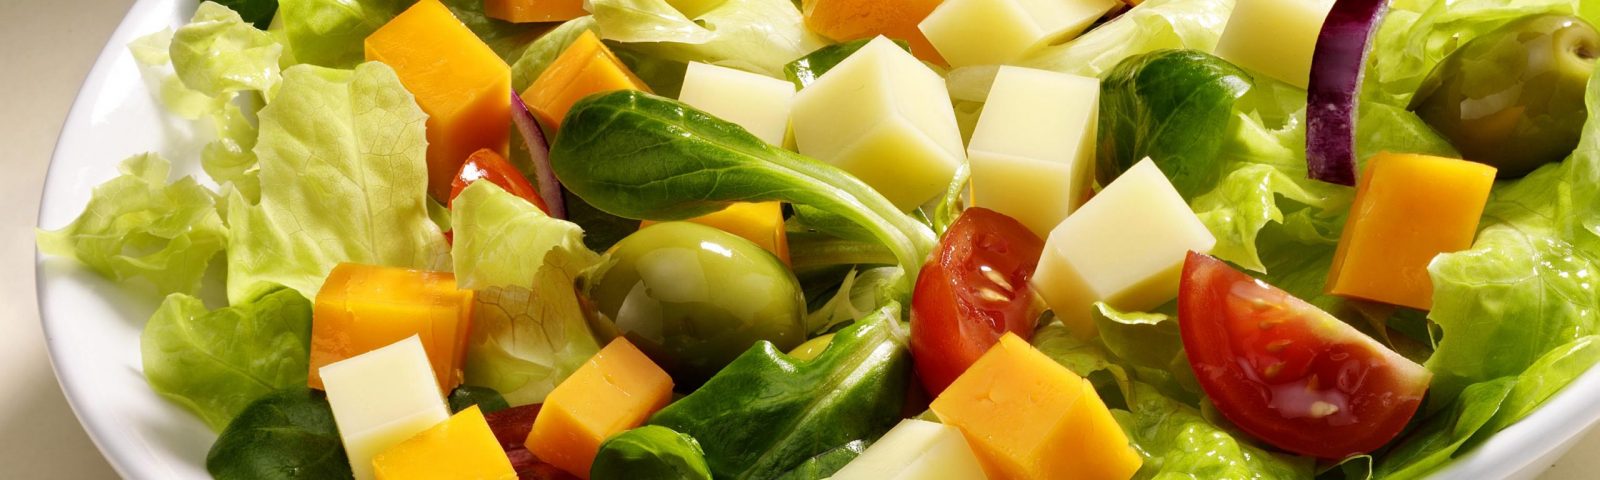 Edam minicubes and salad cheese